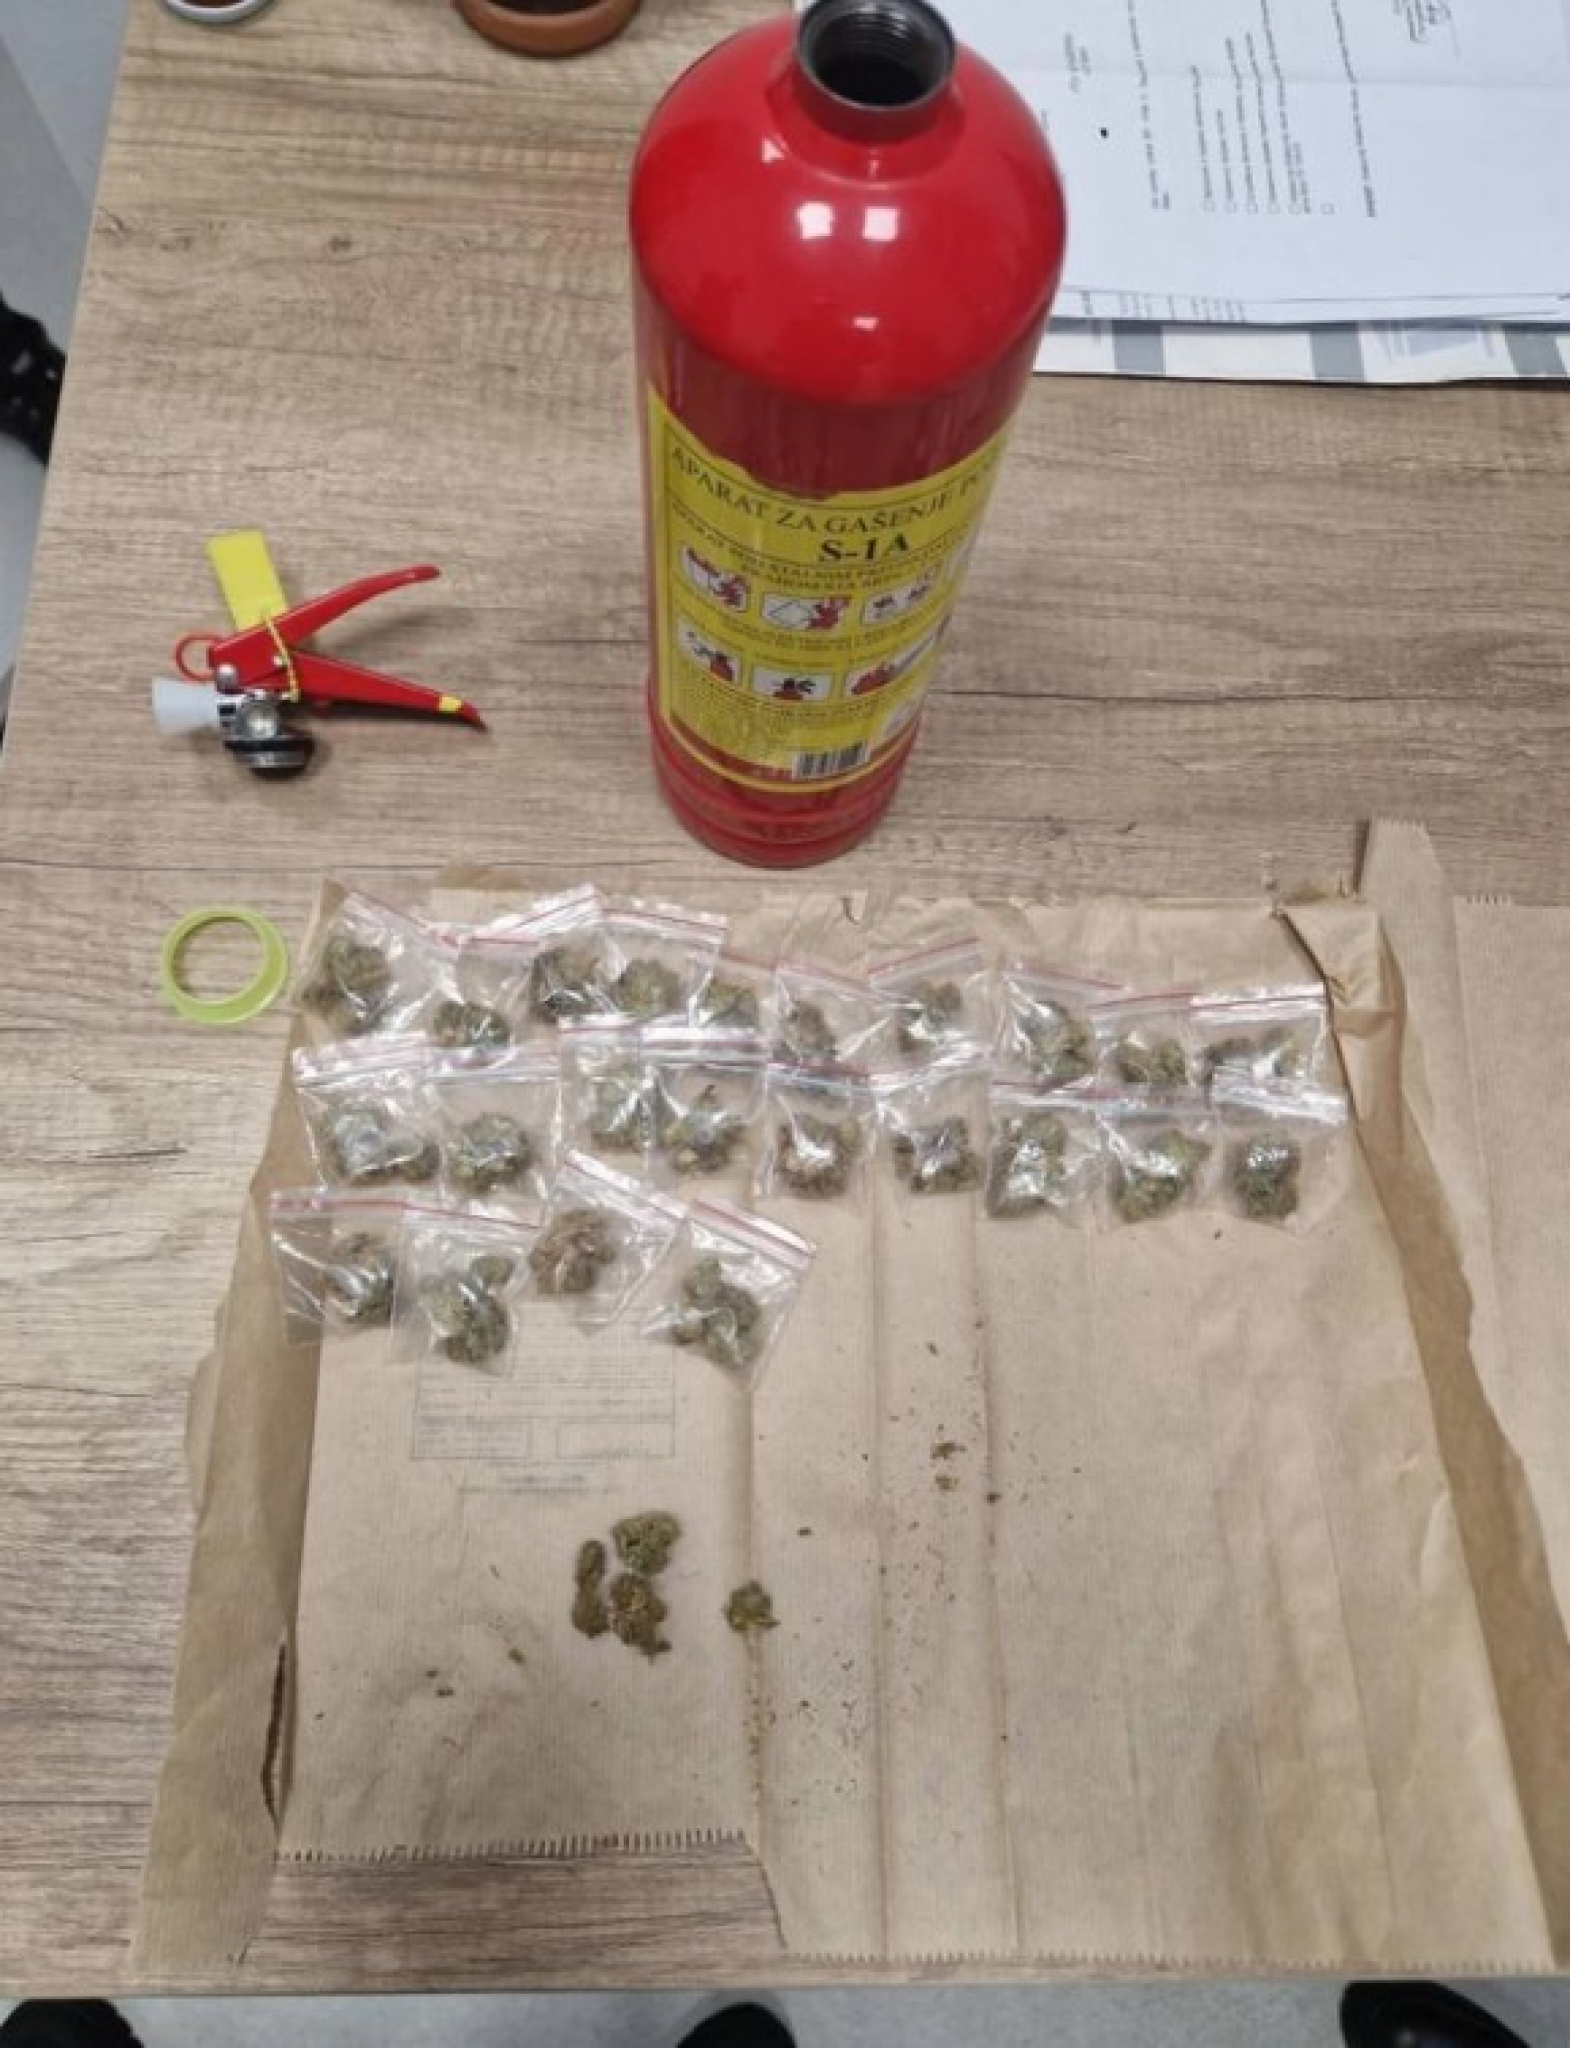 KRIO MARIHUANU NA SKRIVENOM MESTU U AUTOMOBILU ''Pao'' diler, u posebnoj pregradi držao 24 kesice s narkotikom! (FOTO)